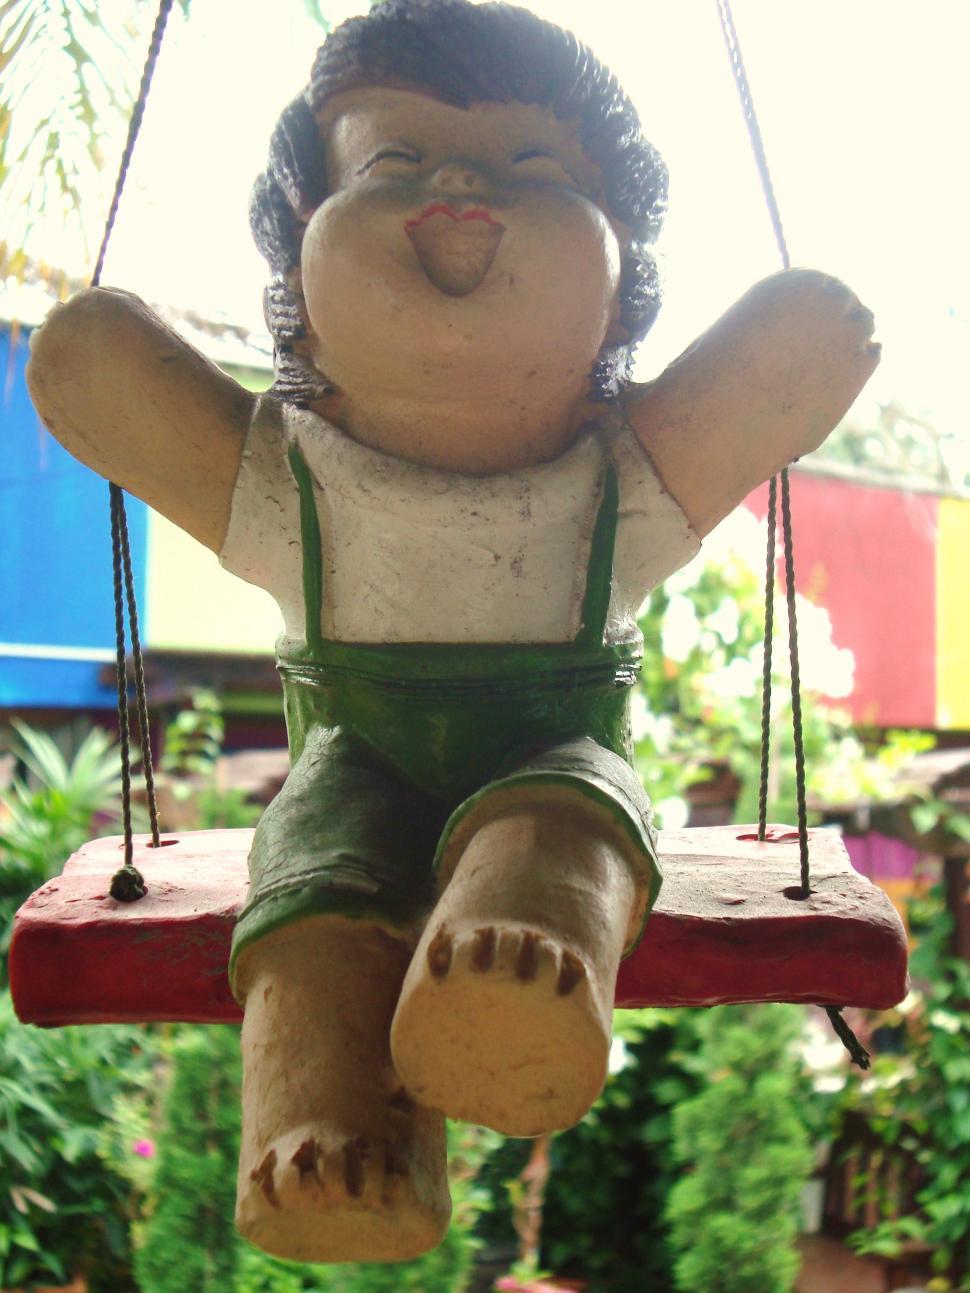 Free Image of Boy Swing Garden Decoration 